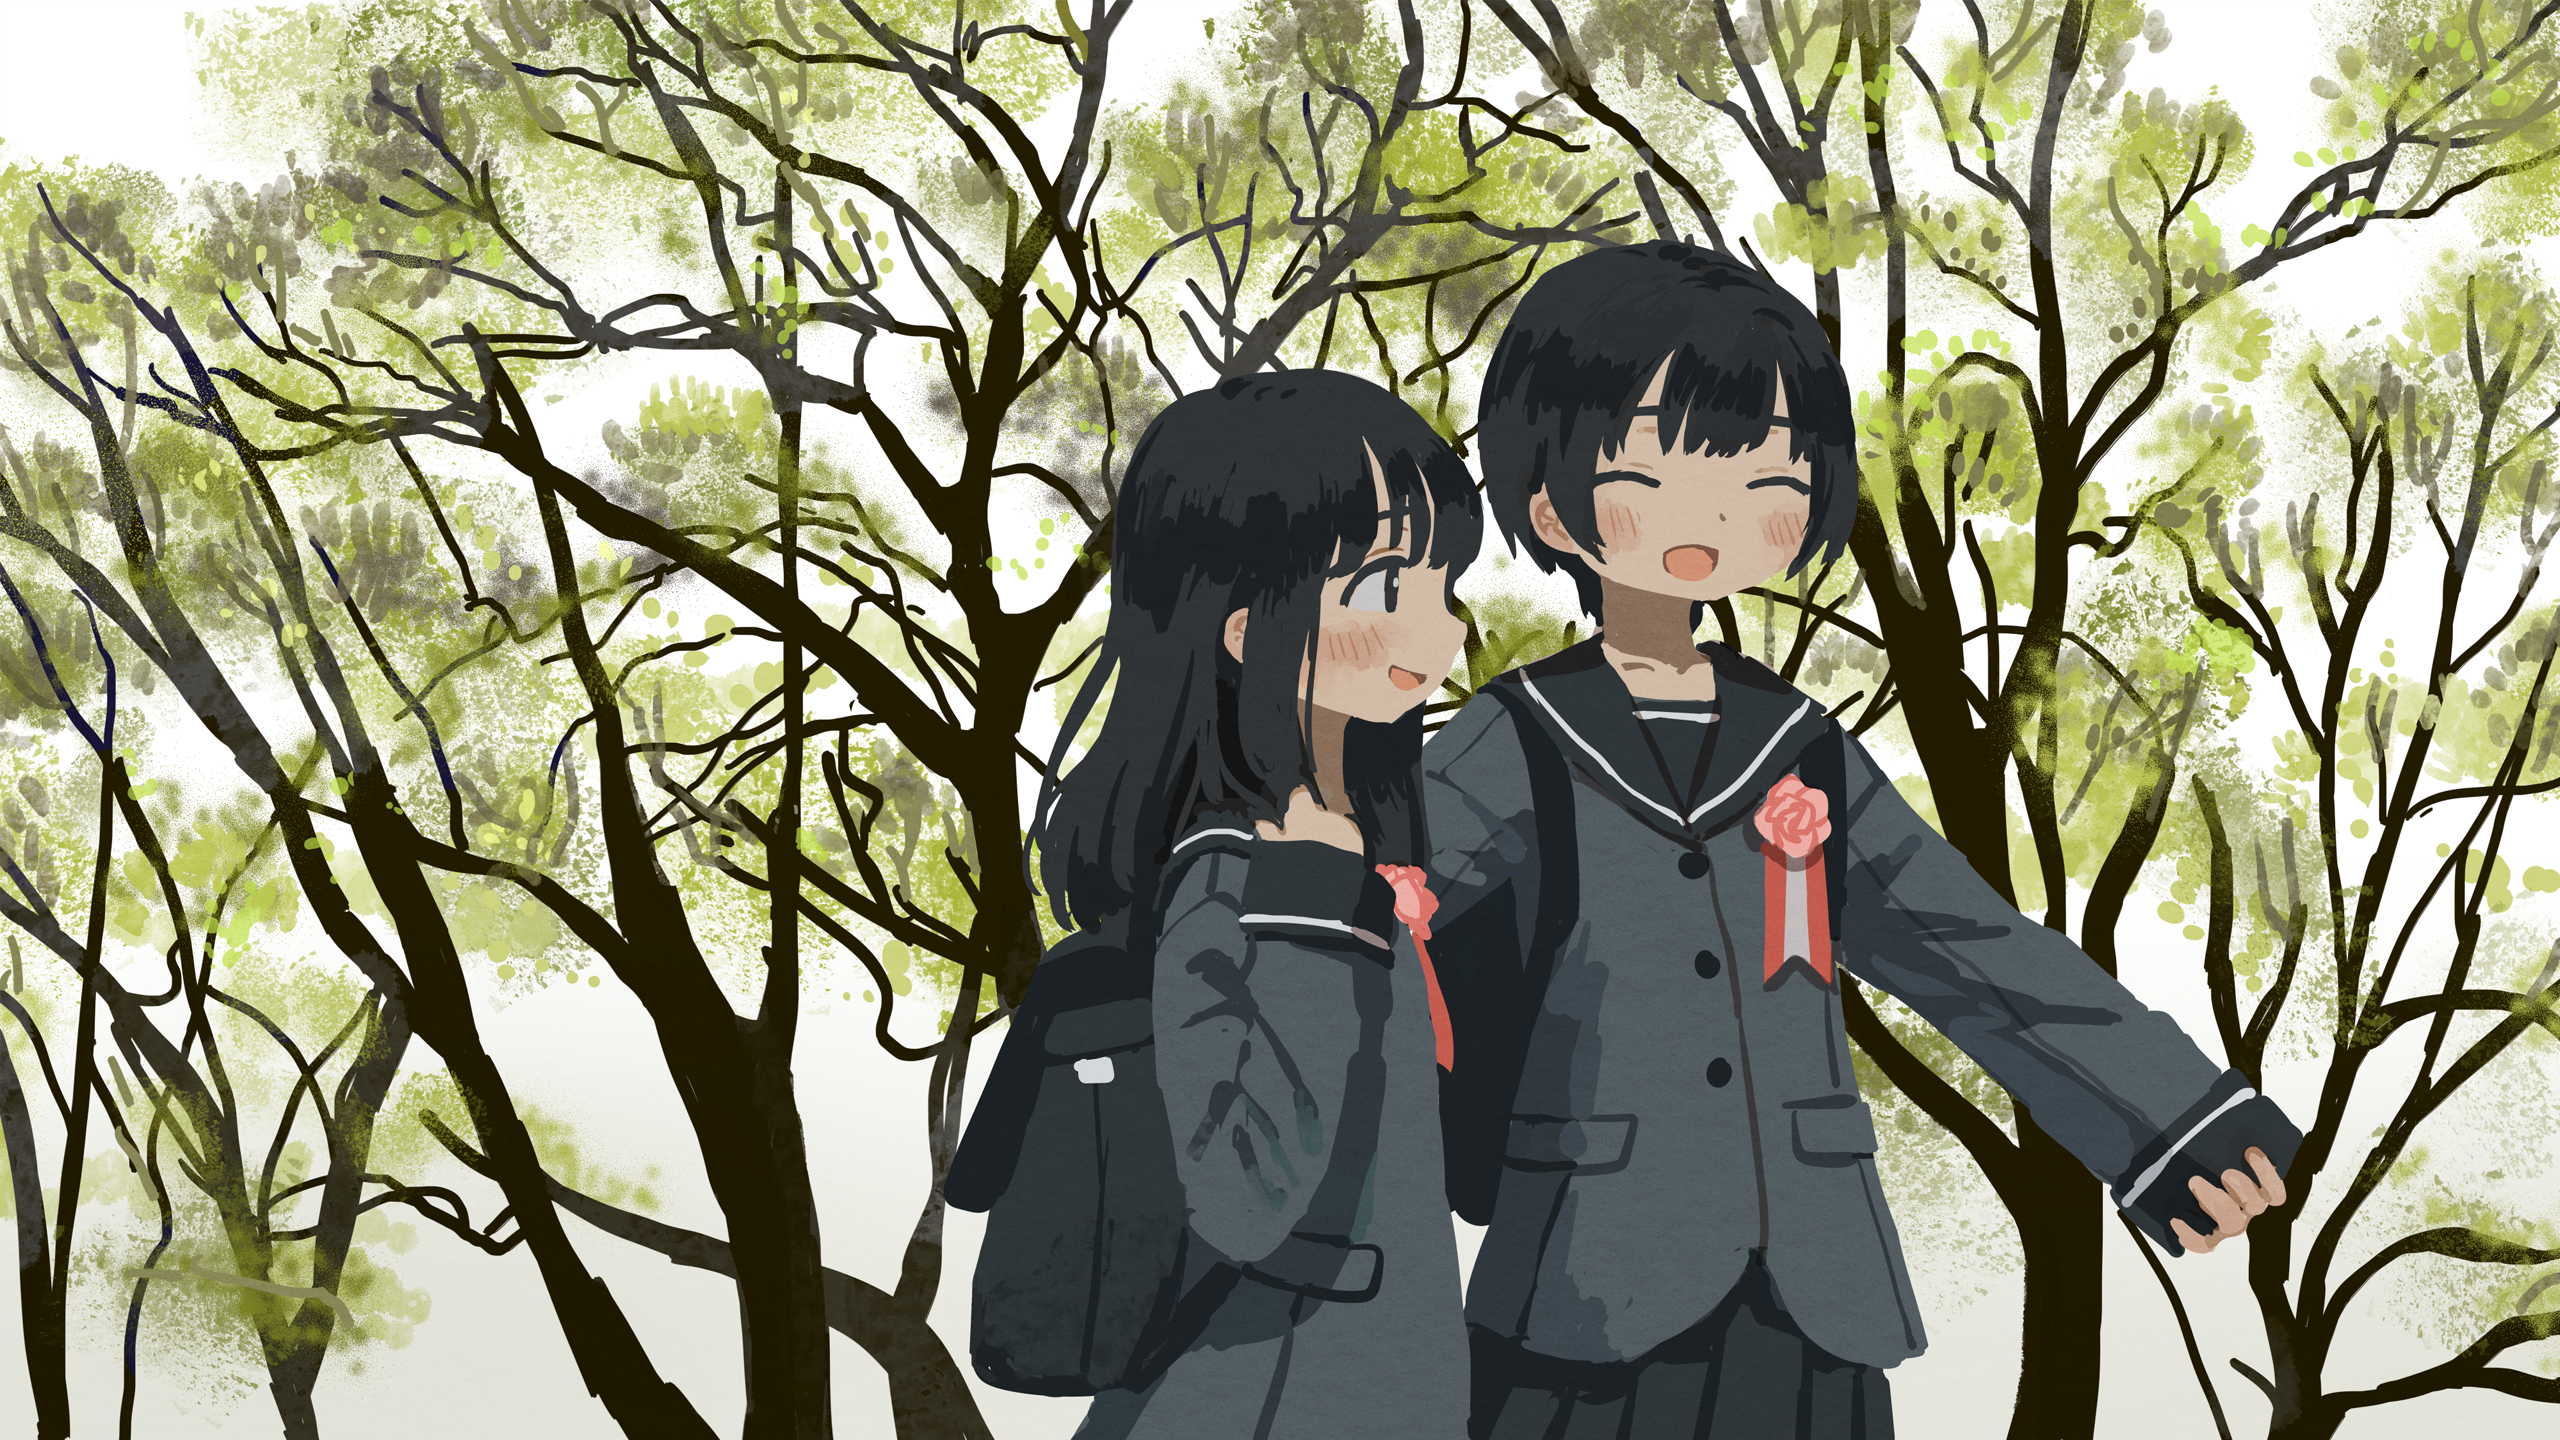 Anime Girls Anime Schoolgirl Sailor Uniform Pleated Skirt Trees Wood Blush Japan Japanese Clothes Zi 2560x1440